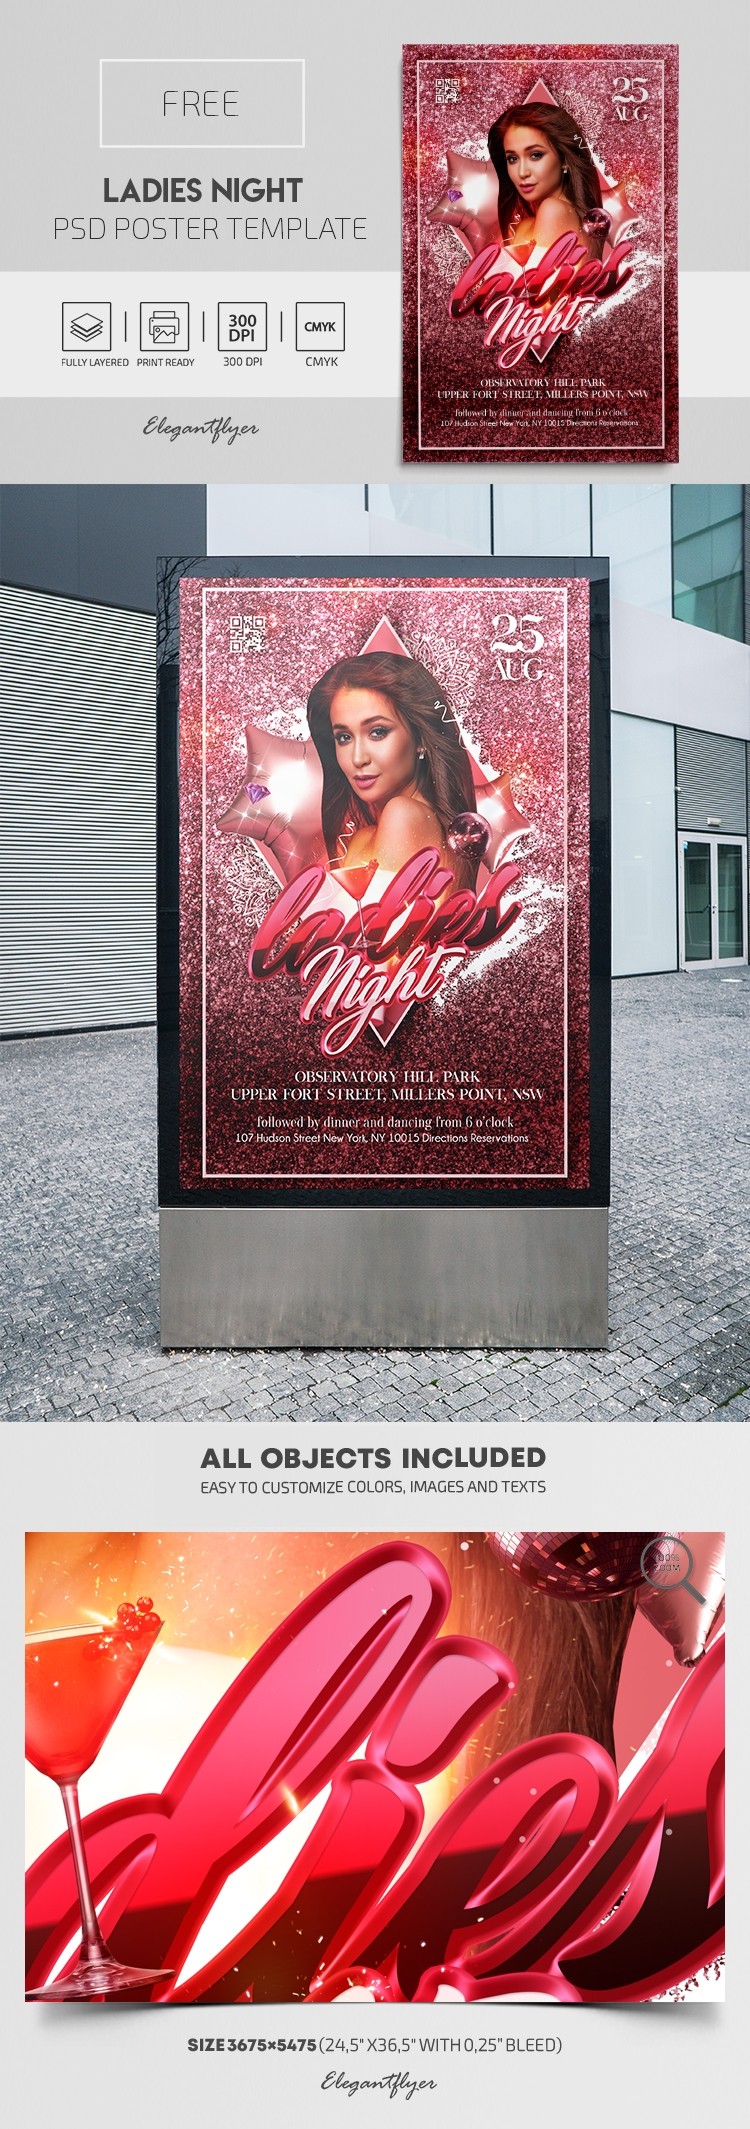 Ladies Night Poster by ElegantFlyer